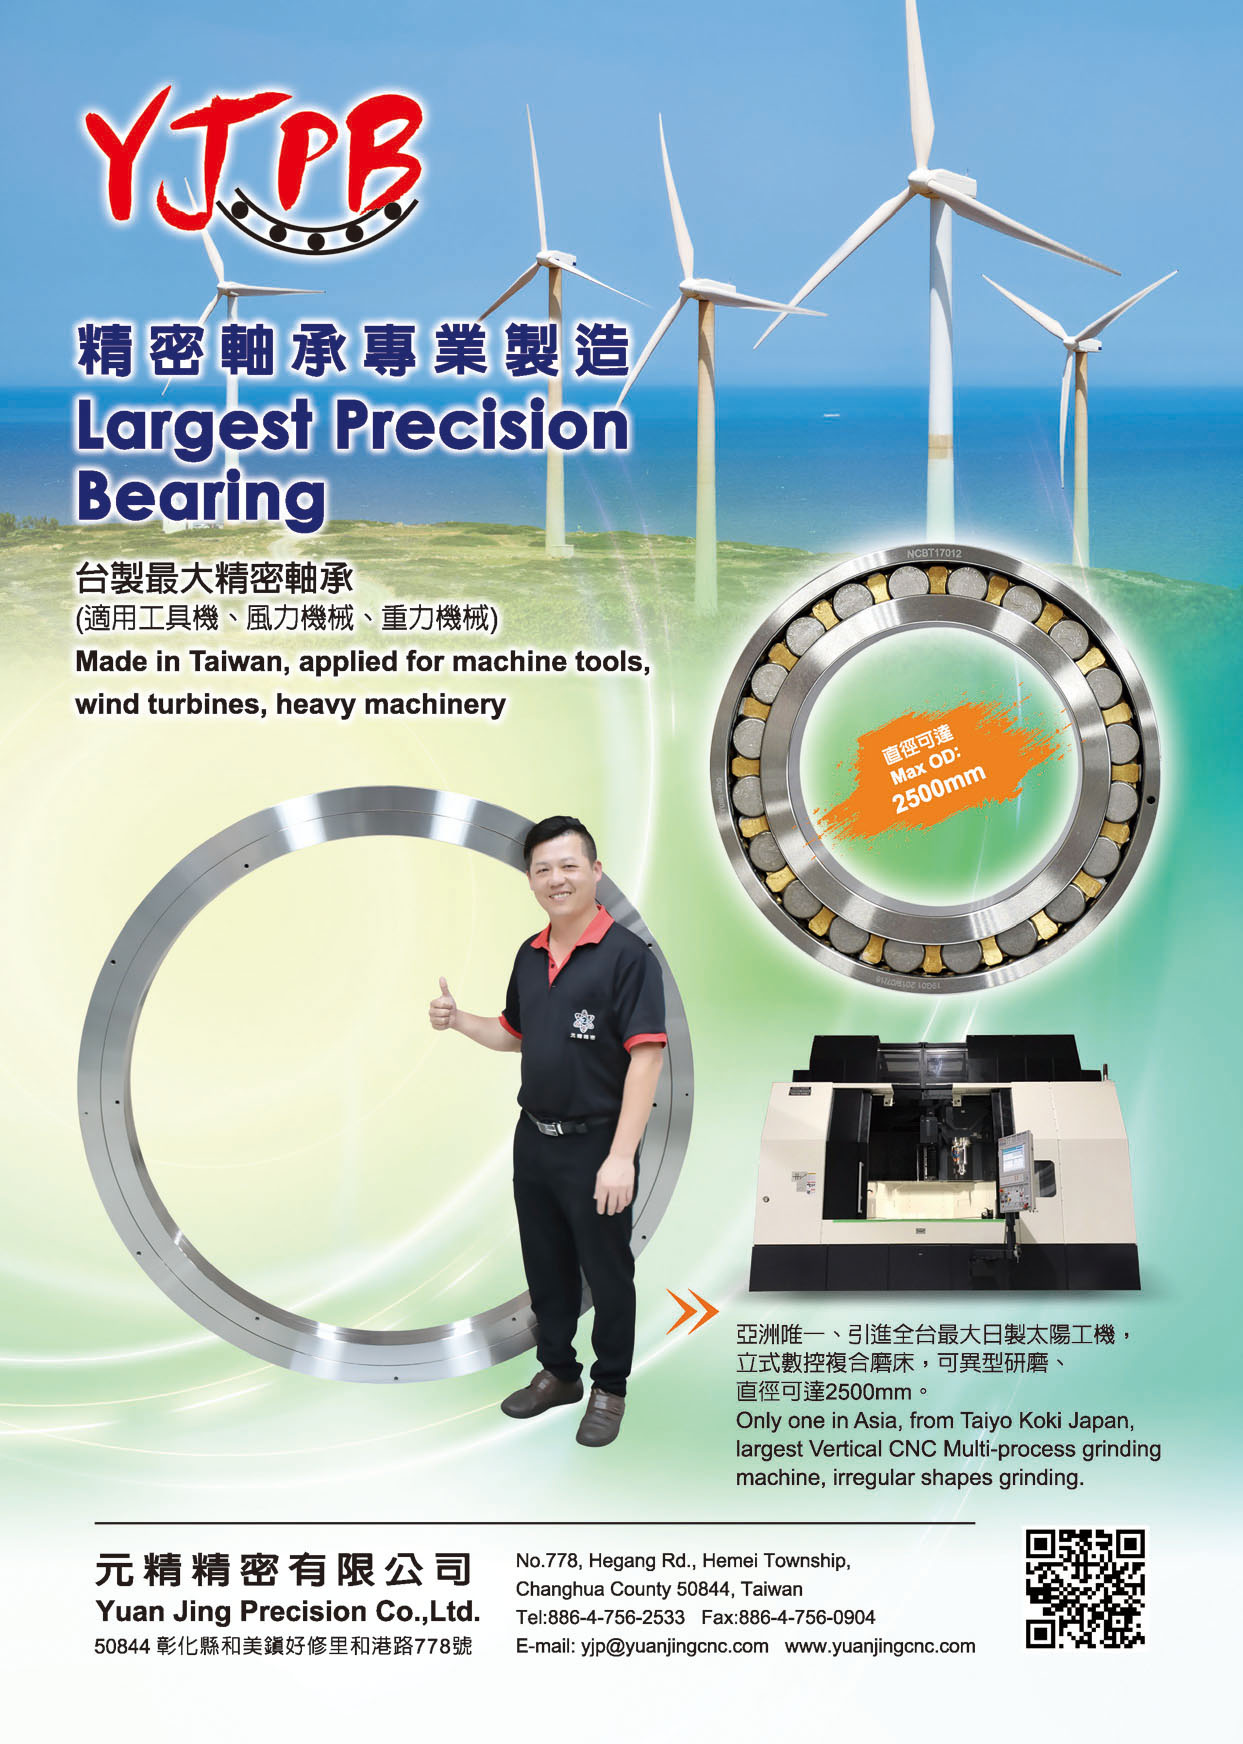 Who Makes Machinery in Taiwan (Chinese) YUAN JING PRECISION CO., LTD.